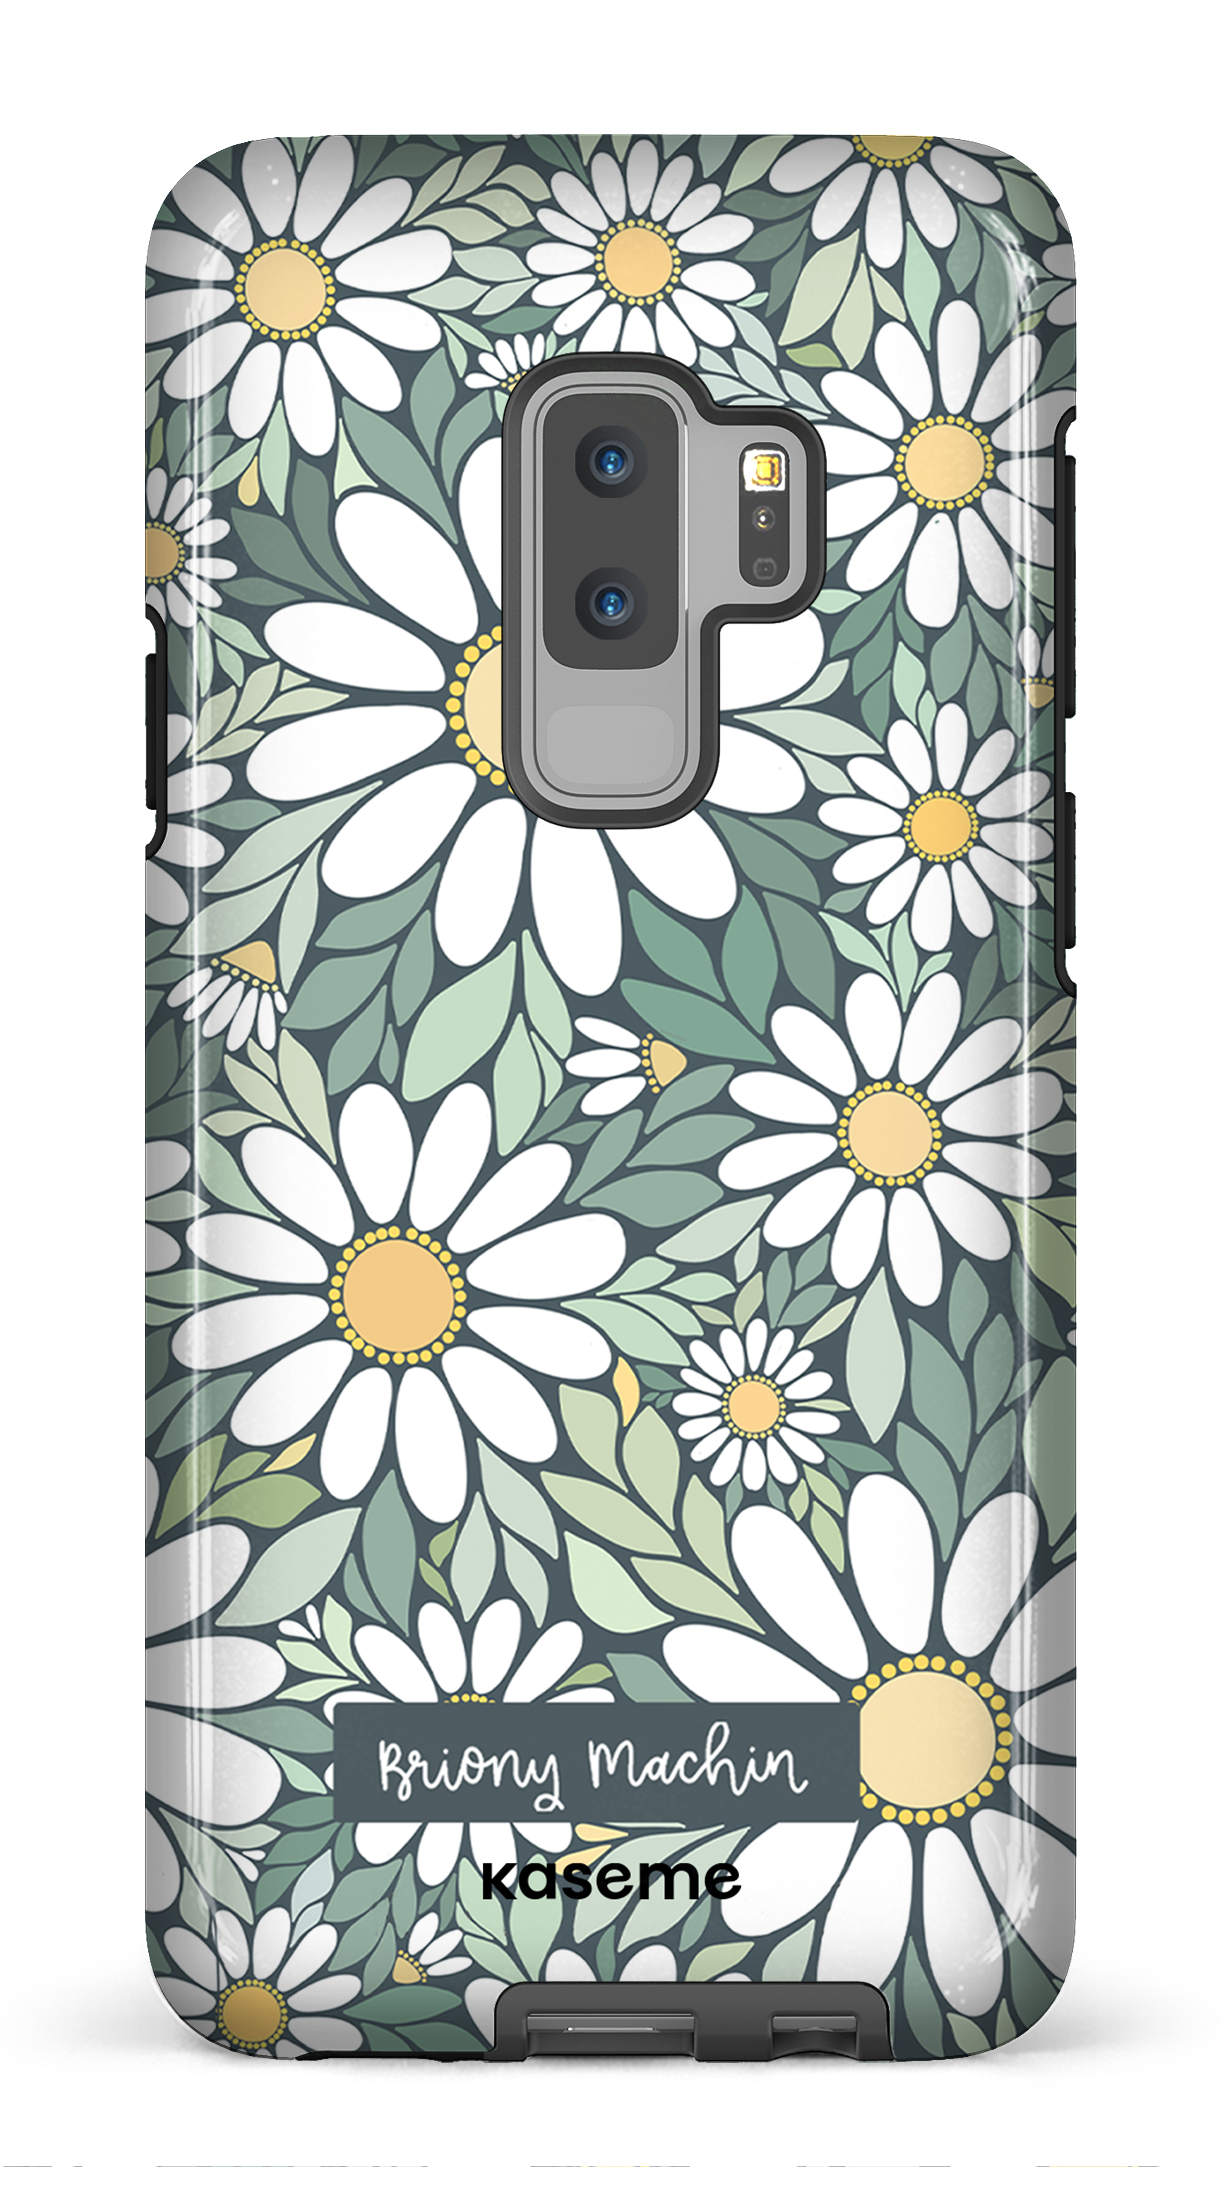 Daisy Blooms by Briony Machin - Galaxy S9 Plus